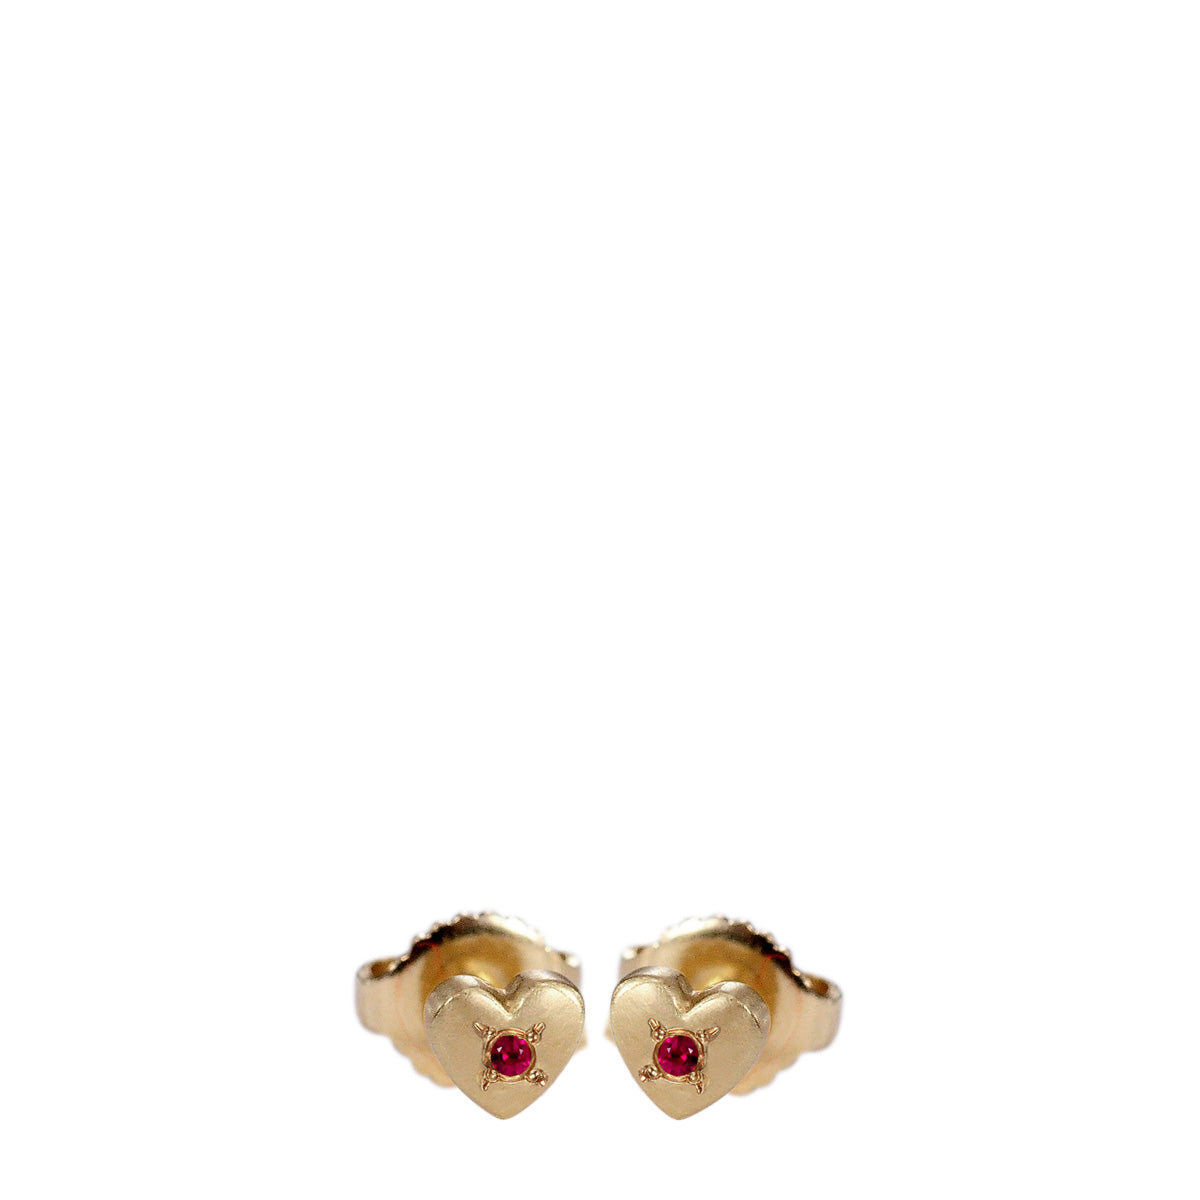 10K Gold Heart Stud Earrings with Rubies